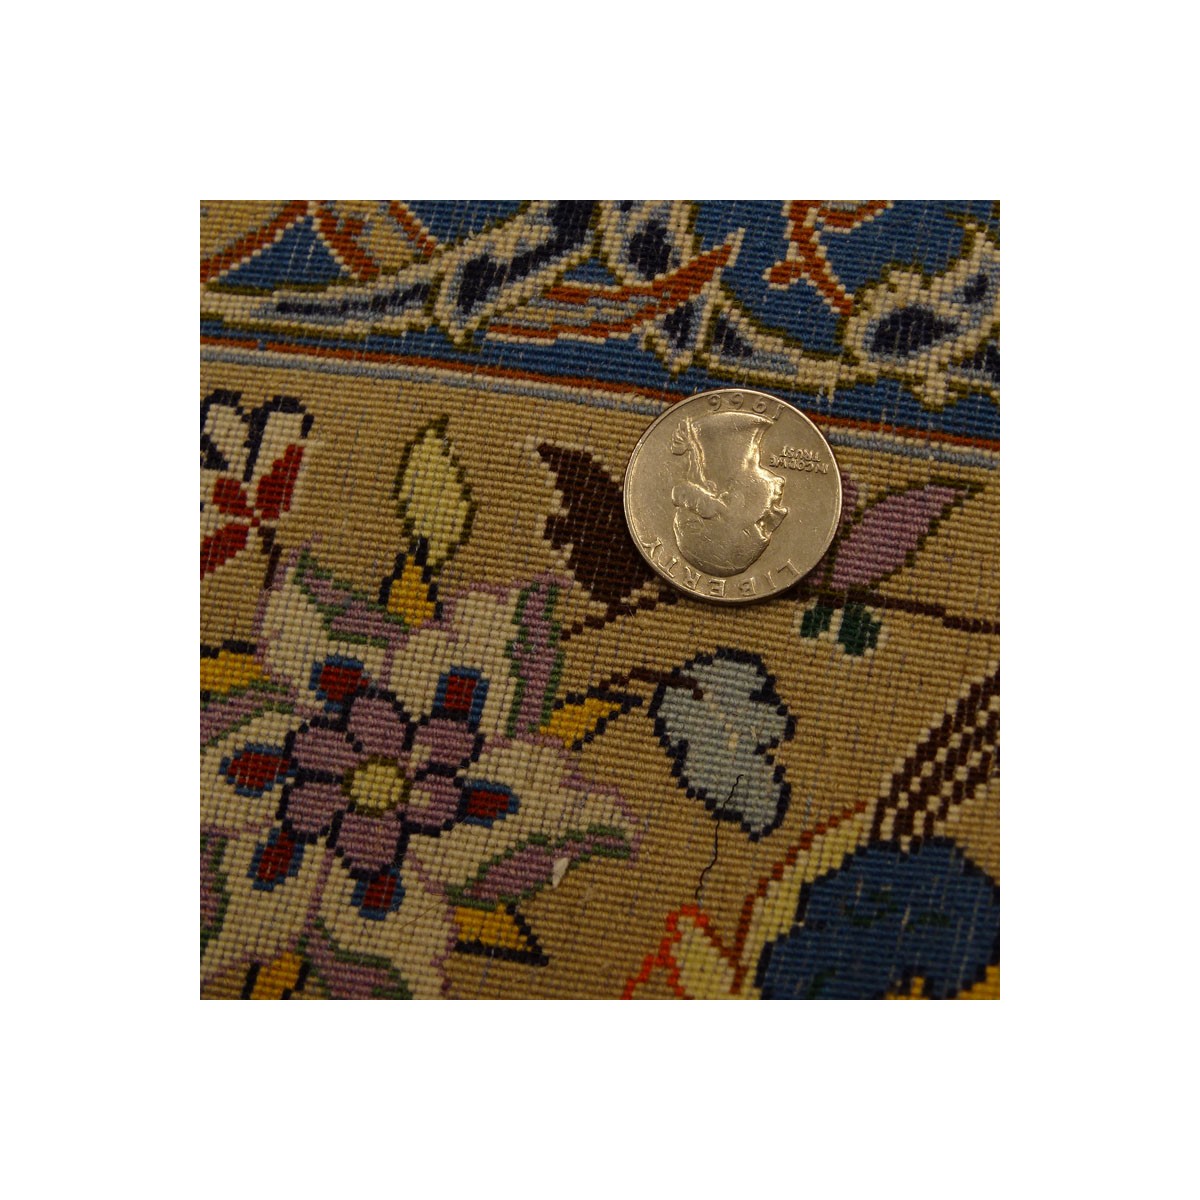 20th Century Persian Isfahan Silk and Wool Rug. Depicting an Omar Khayaam C